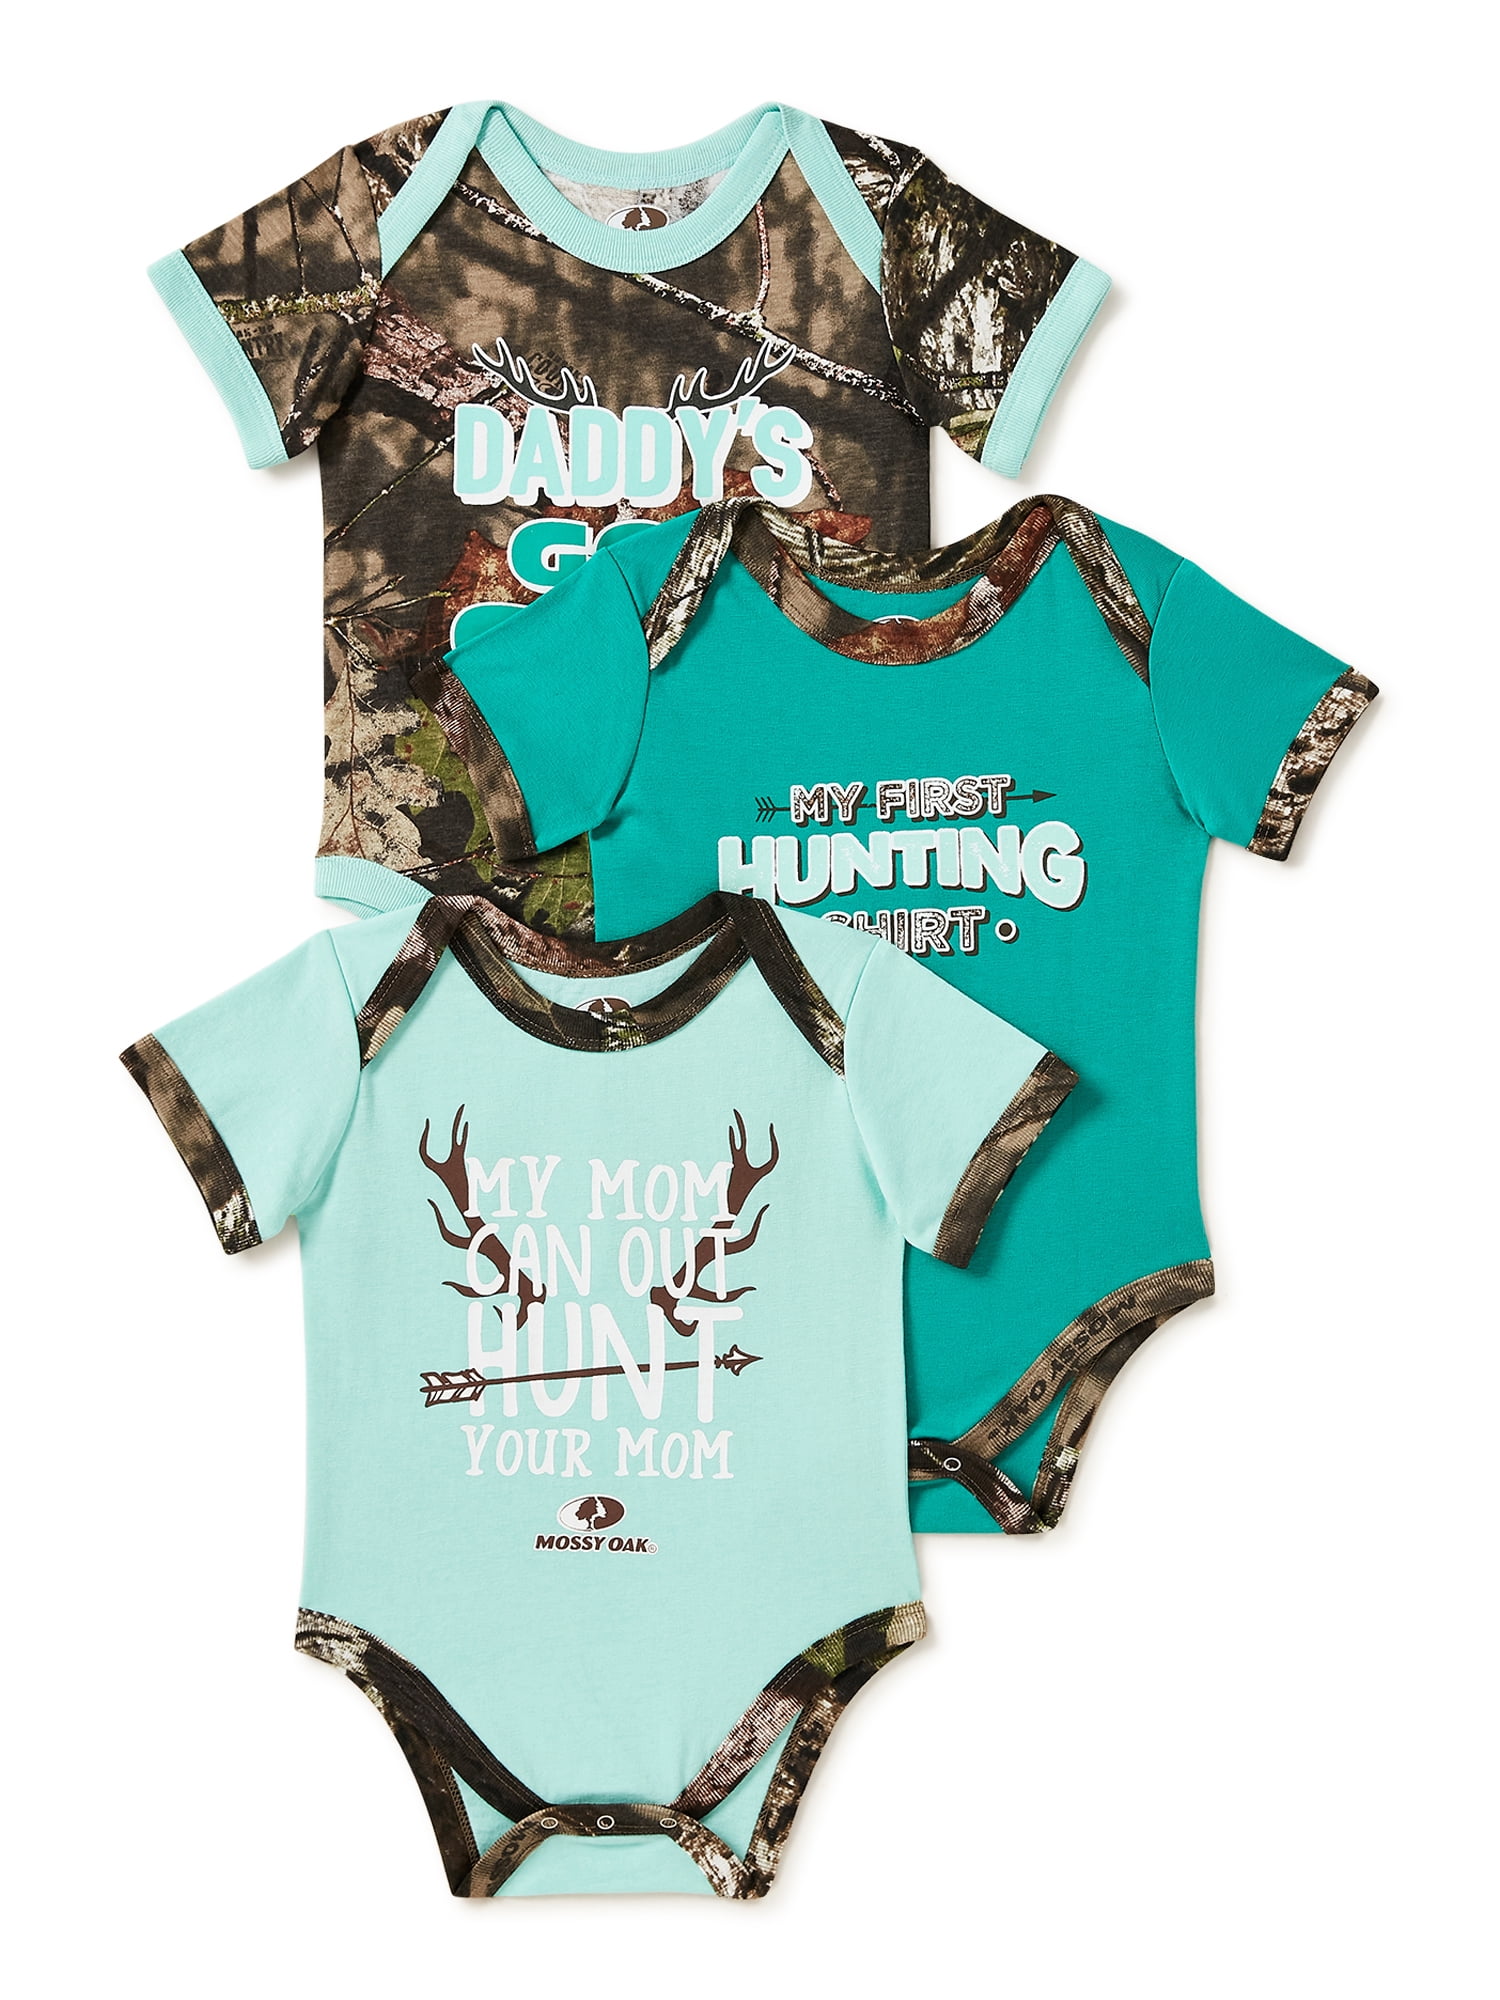 Mossy Oak Camo 2pcs Bodysuit set Outfit Hunting Shirt Baby NEW Infant Sizes 